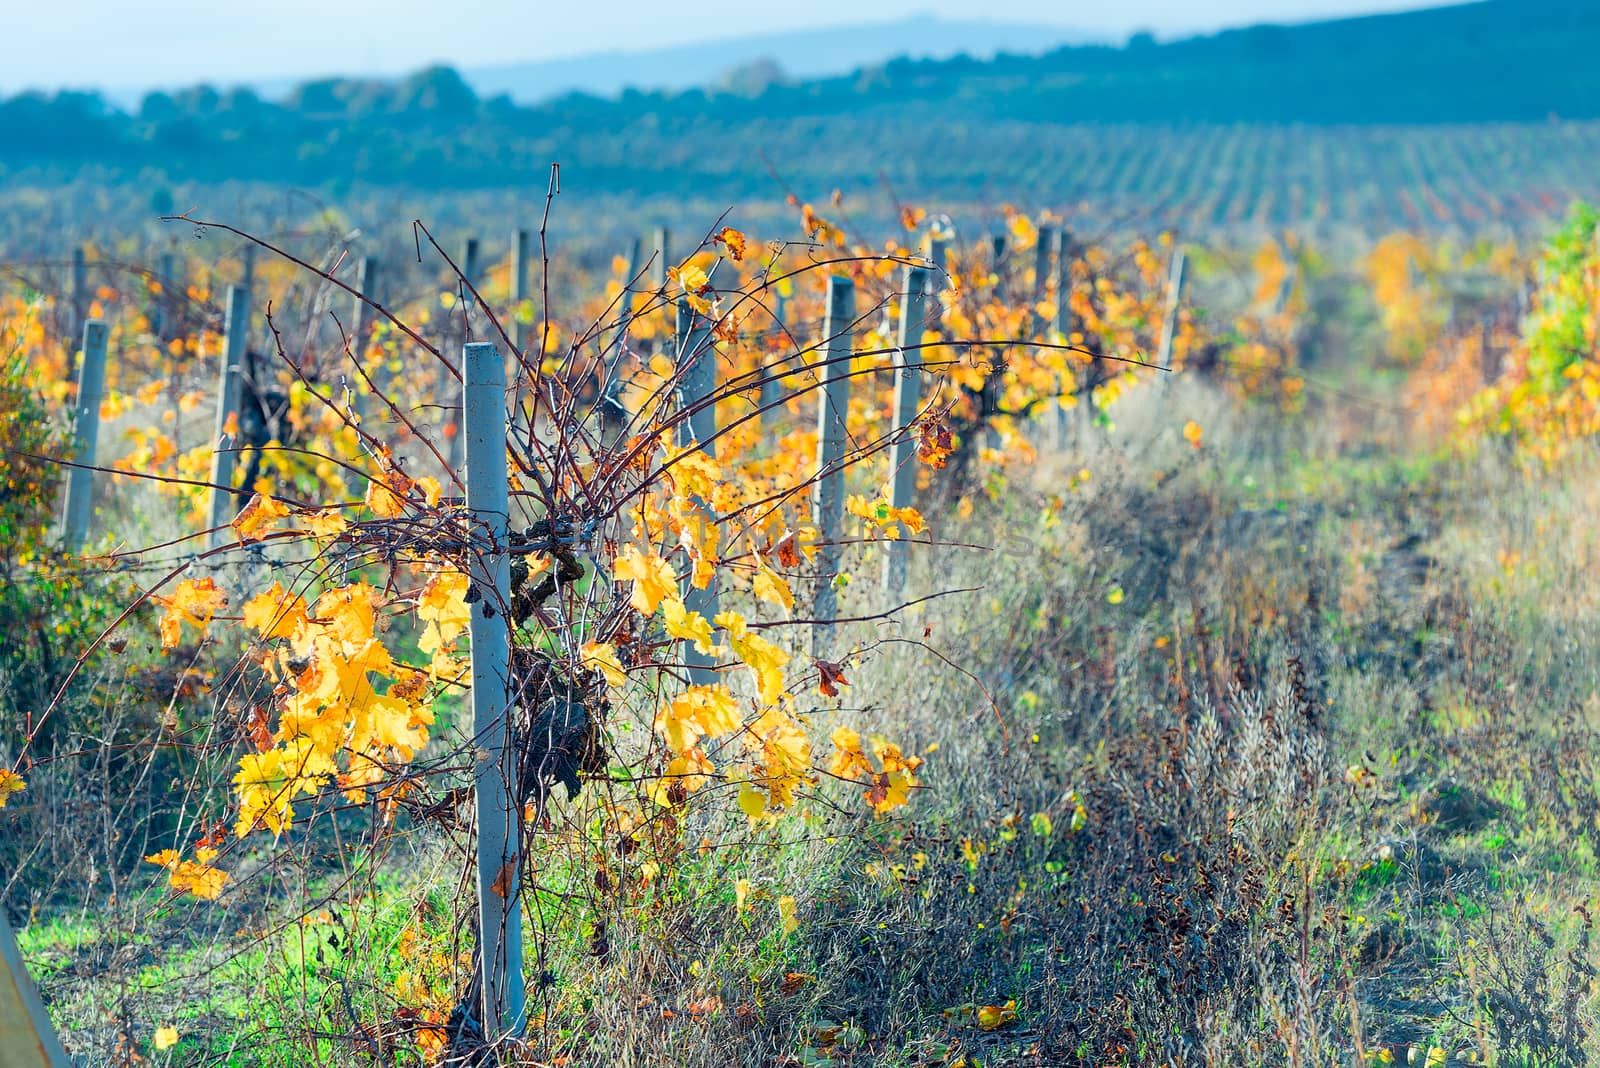 Field vineyard vines after harvest, autumn view by kosmsos111